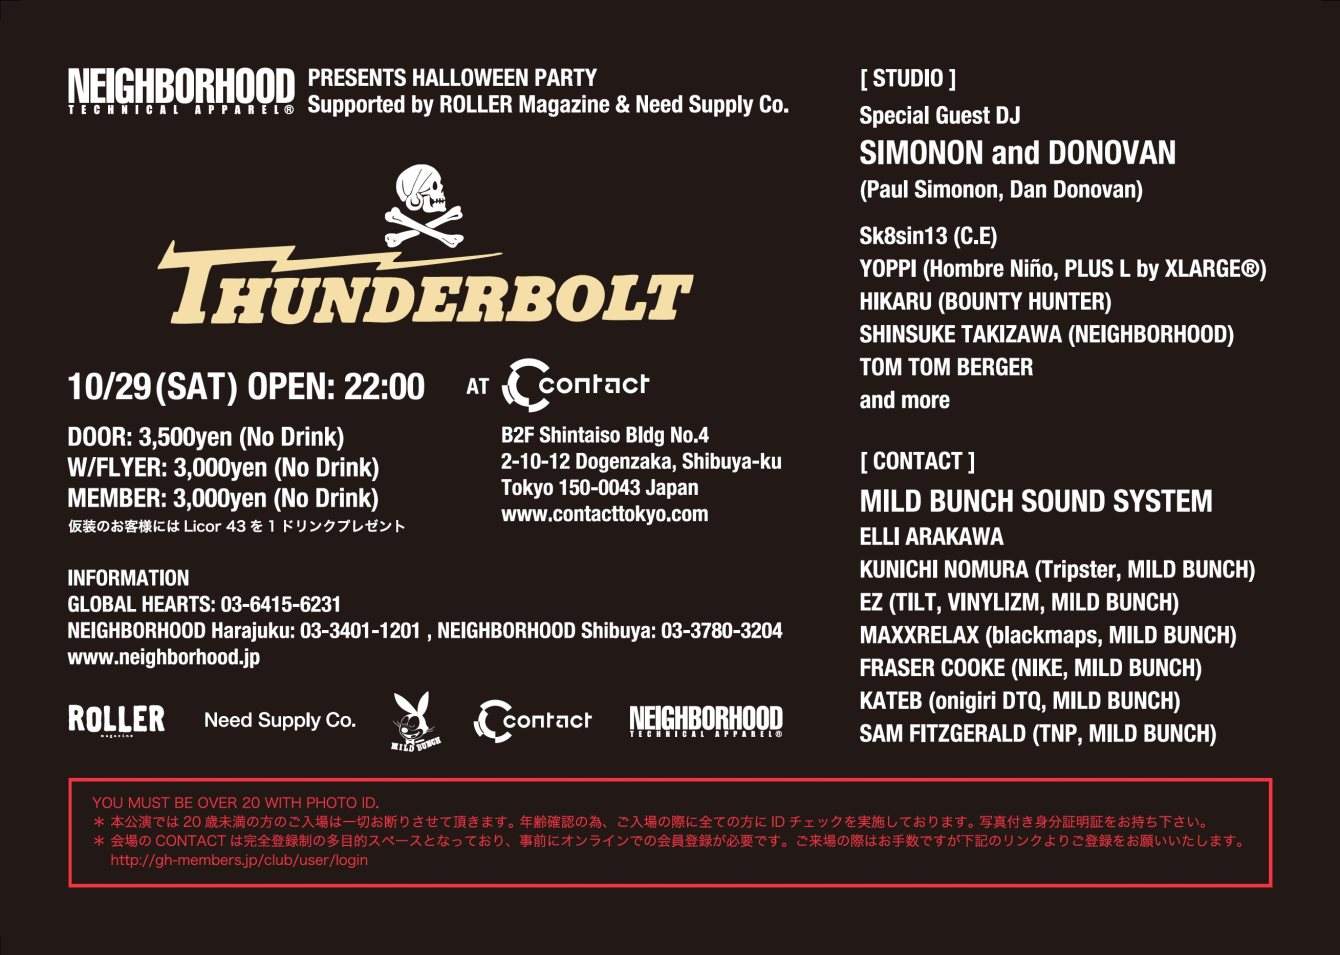 Neighborhood presents Halloween Party “Thunderbolt” - フライヤー裏